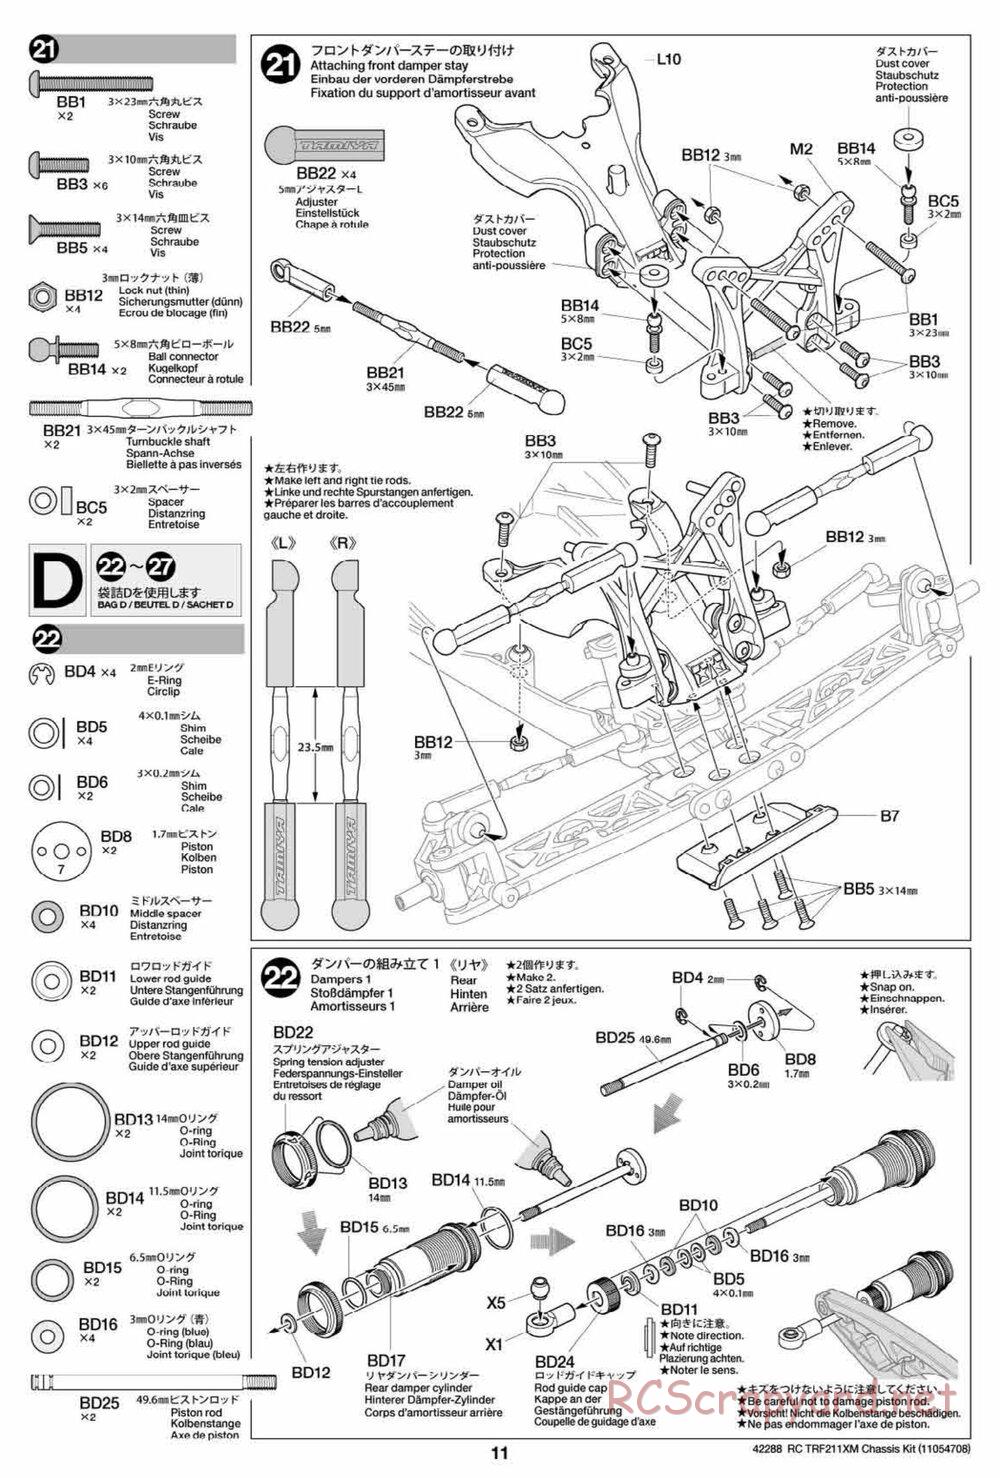 Tamiya - TRF211XM Chassis - Manual - Page 11